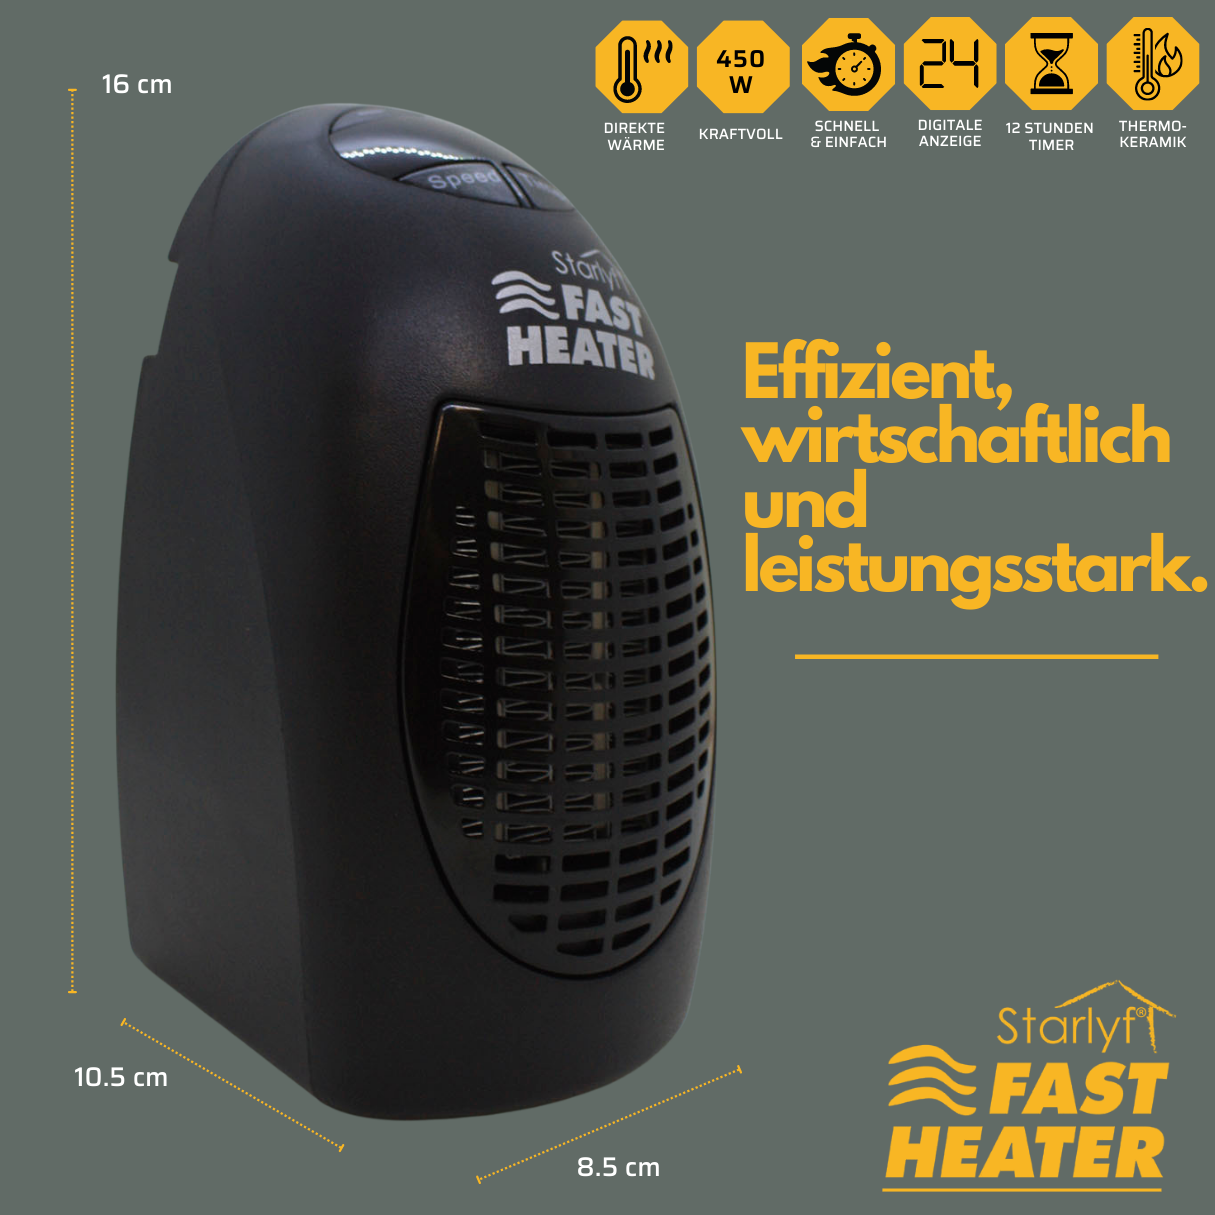 Watt, Heater (400 15 Fast Raumgröße: Heizlüfter STARLYF Schwarz m²)